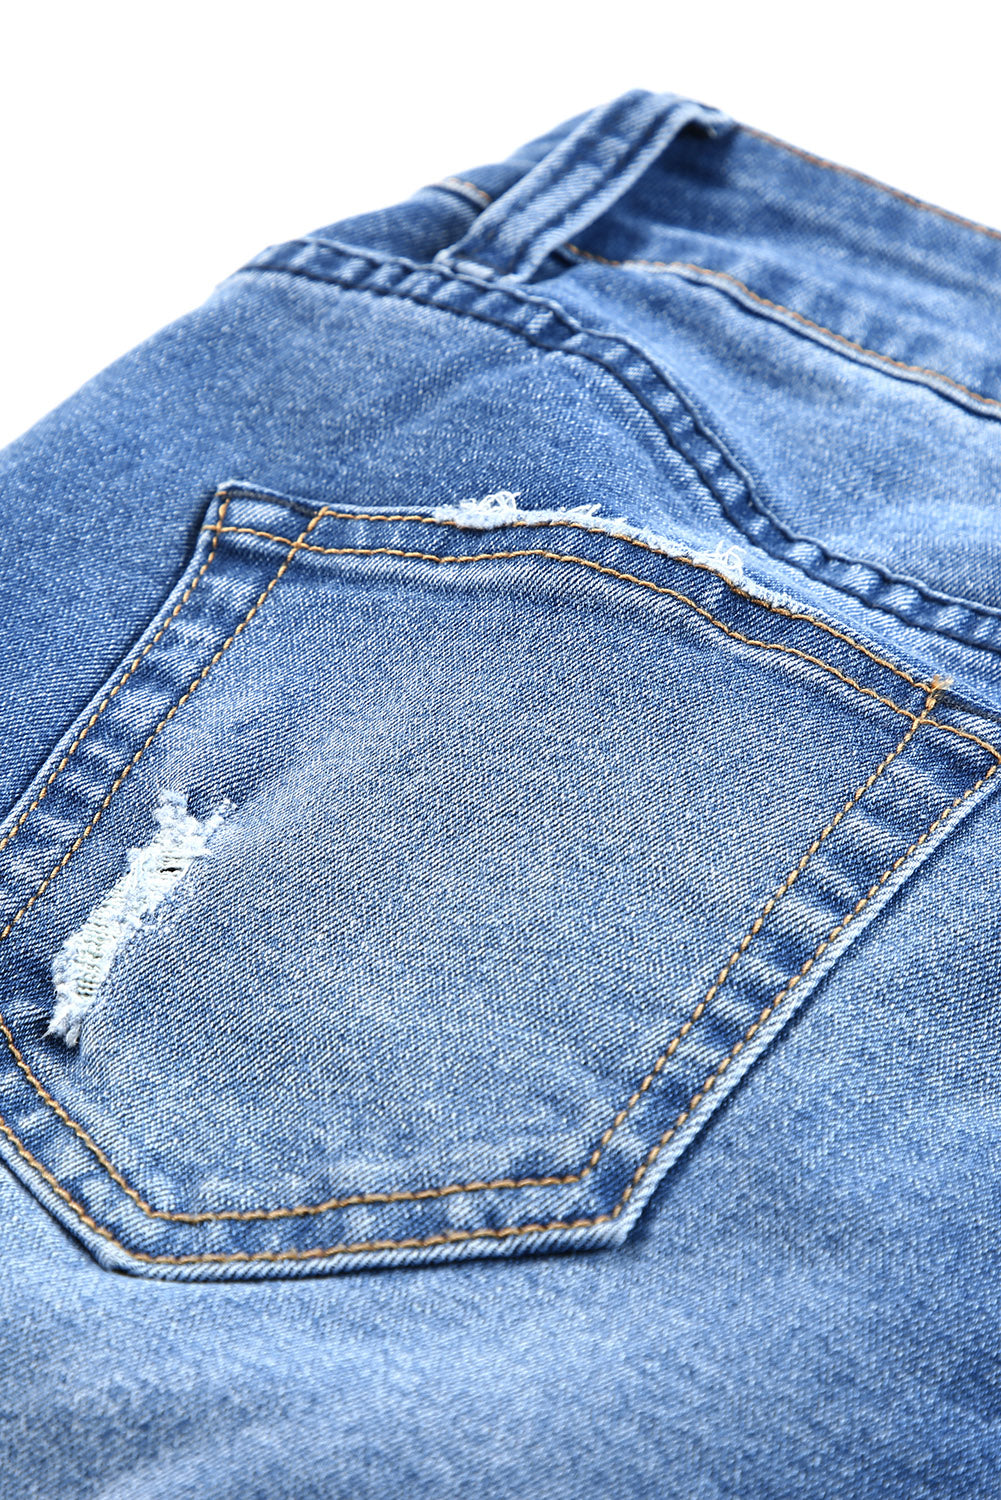 Sky Blue Acid Wash Roll-up Edge Bermuda Short Jeans Denim Shorts JT's Designer Fashion